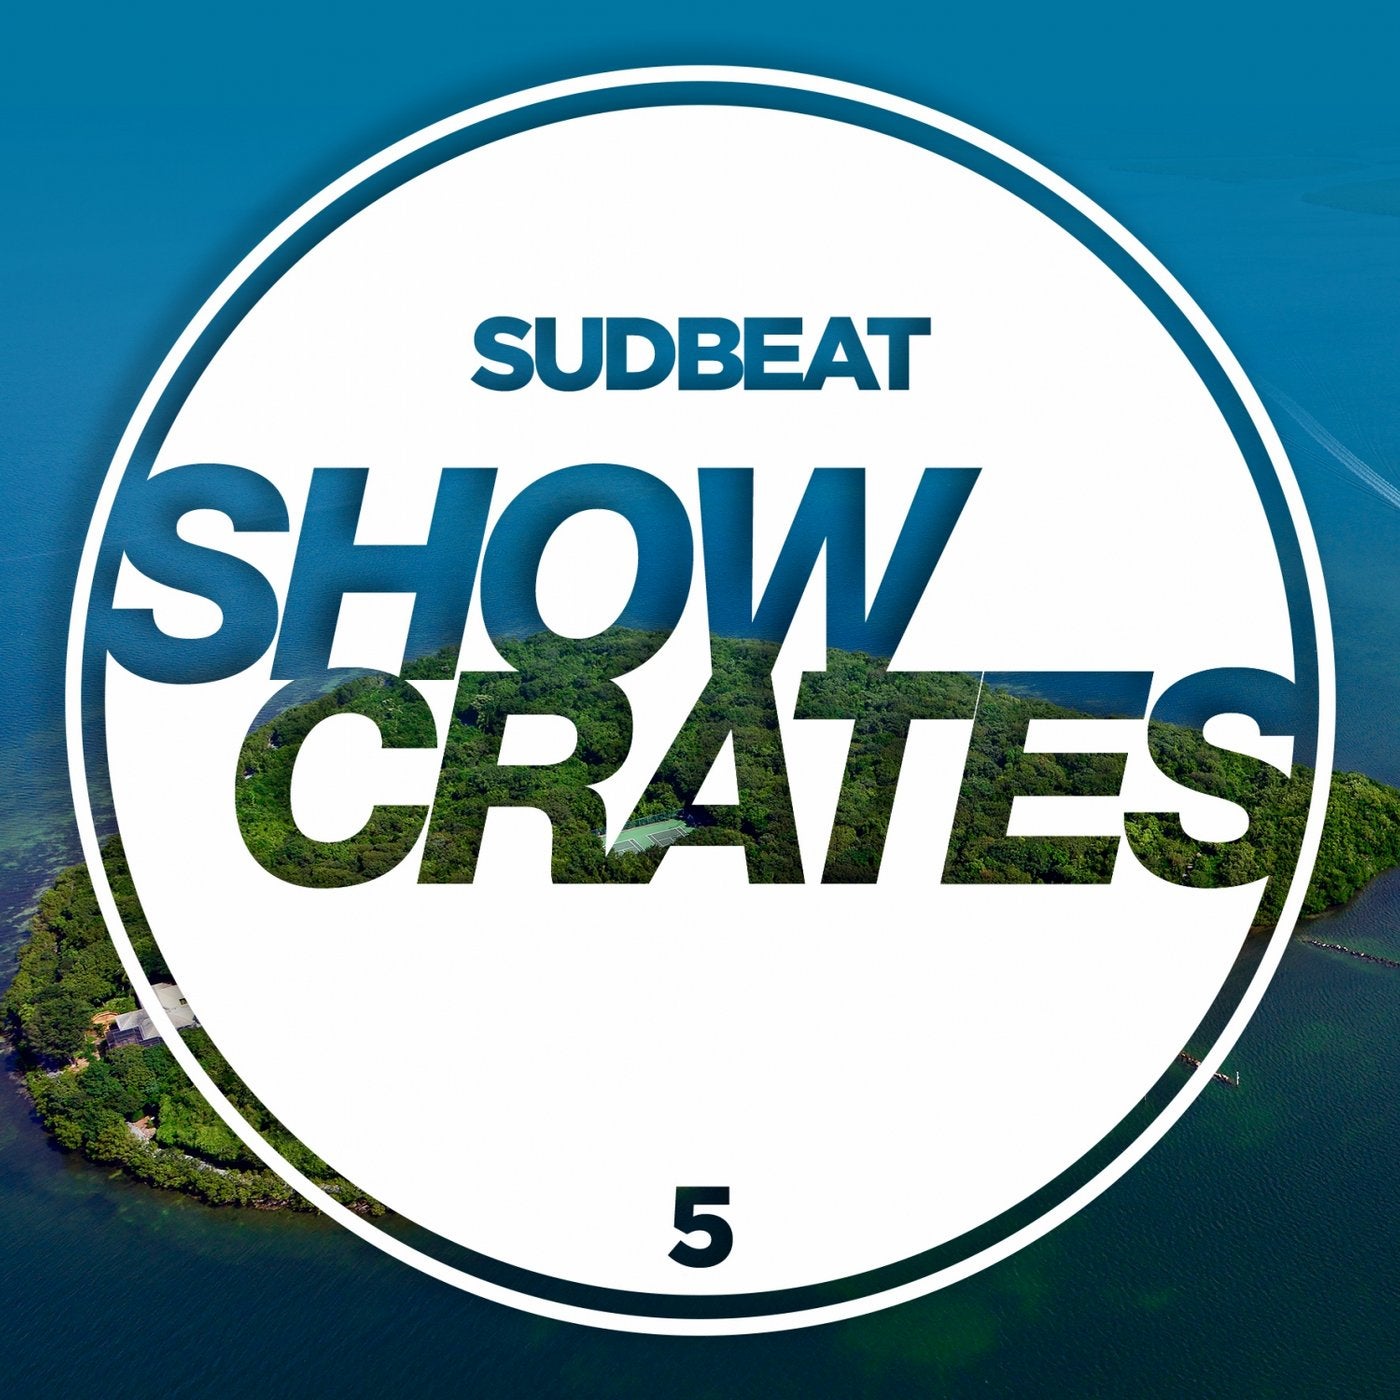 Sudbeat Showcrates 5